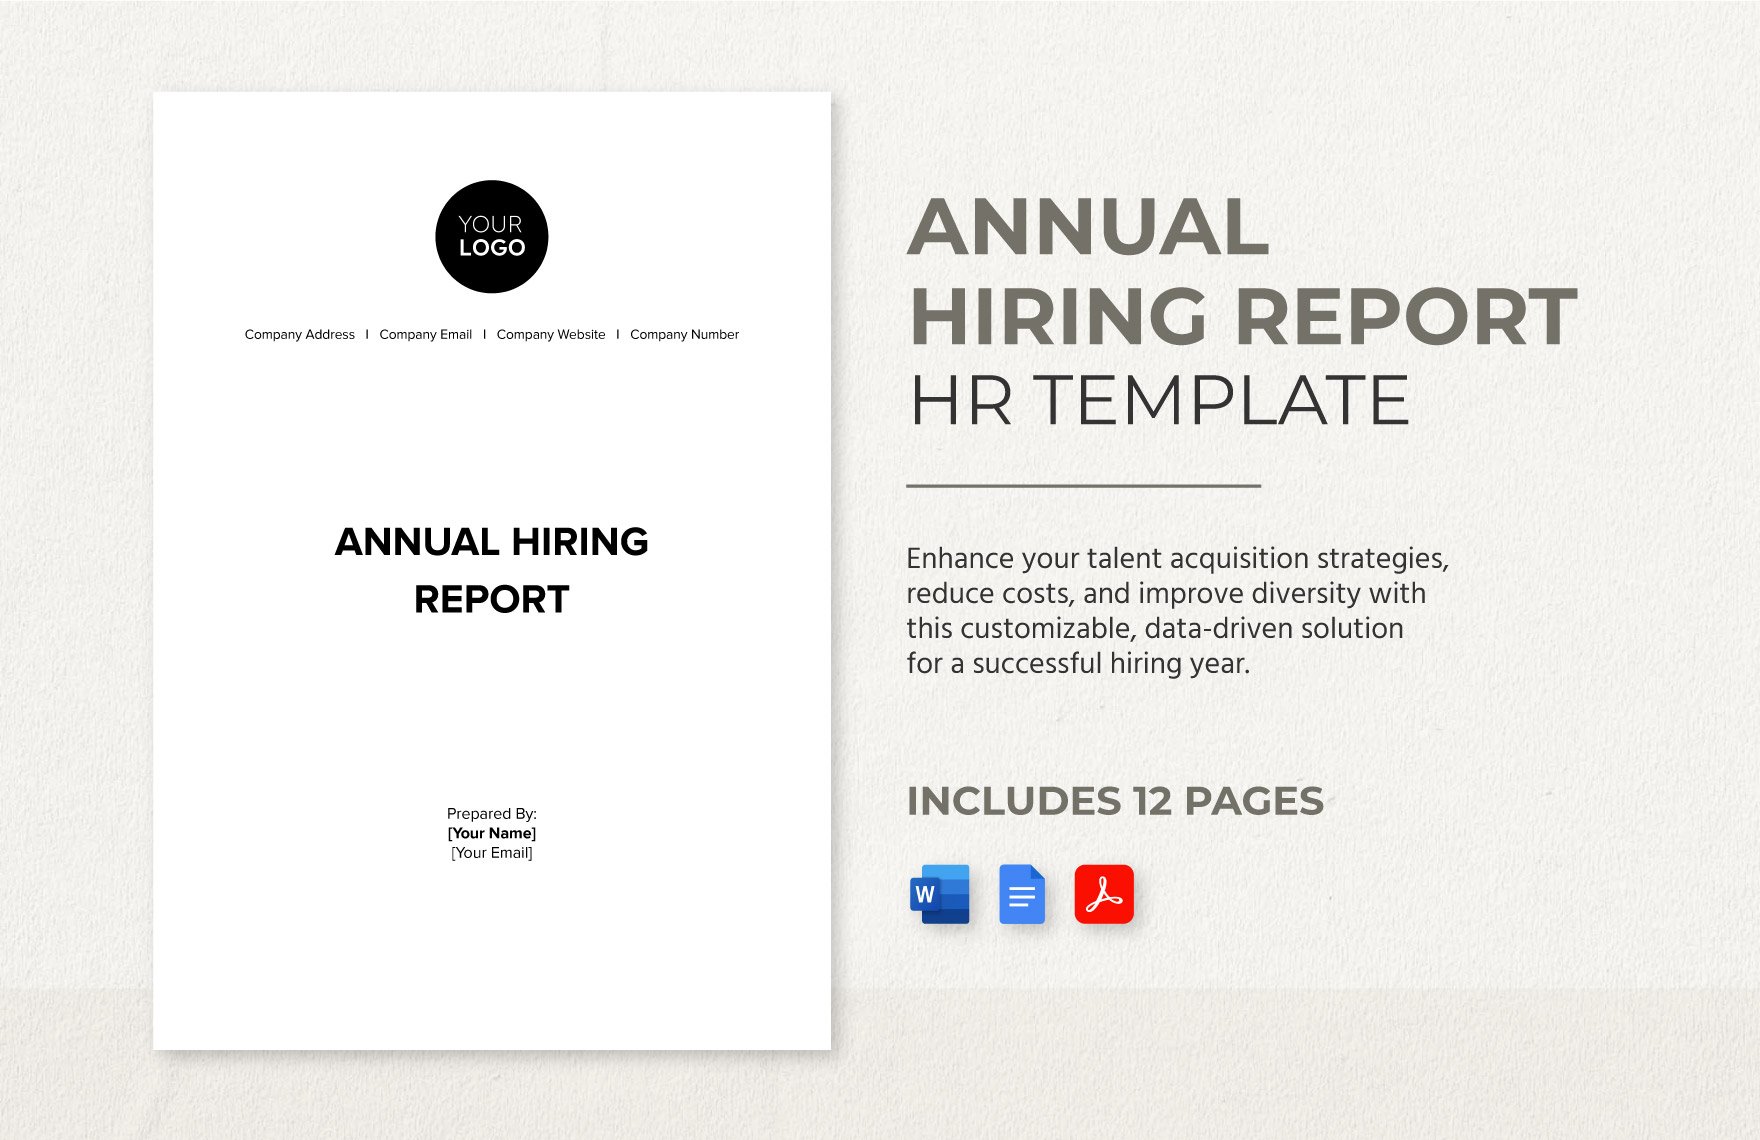 Annual Hiring Report HR Template in Word, Google Docs, PDF